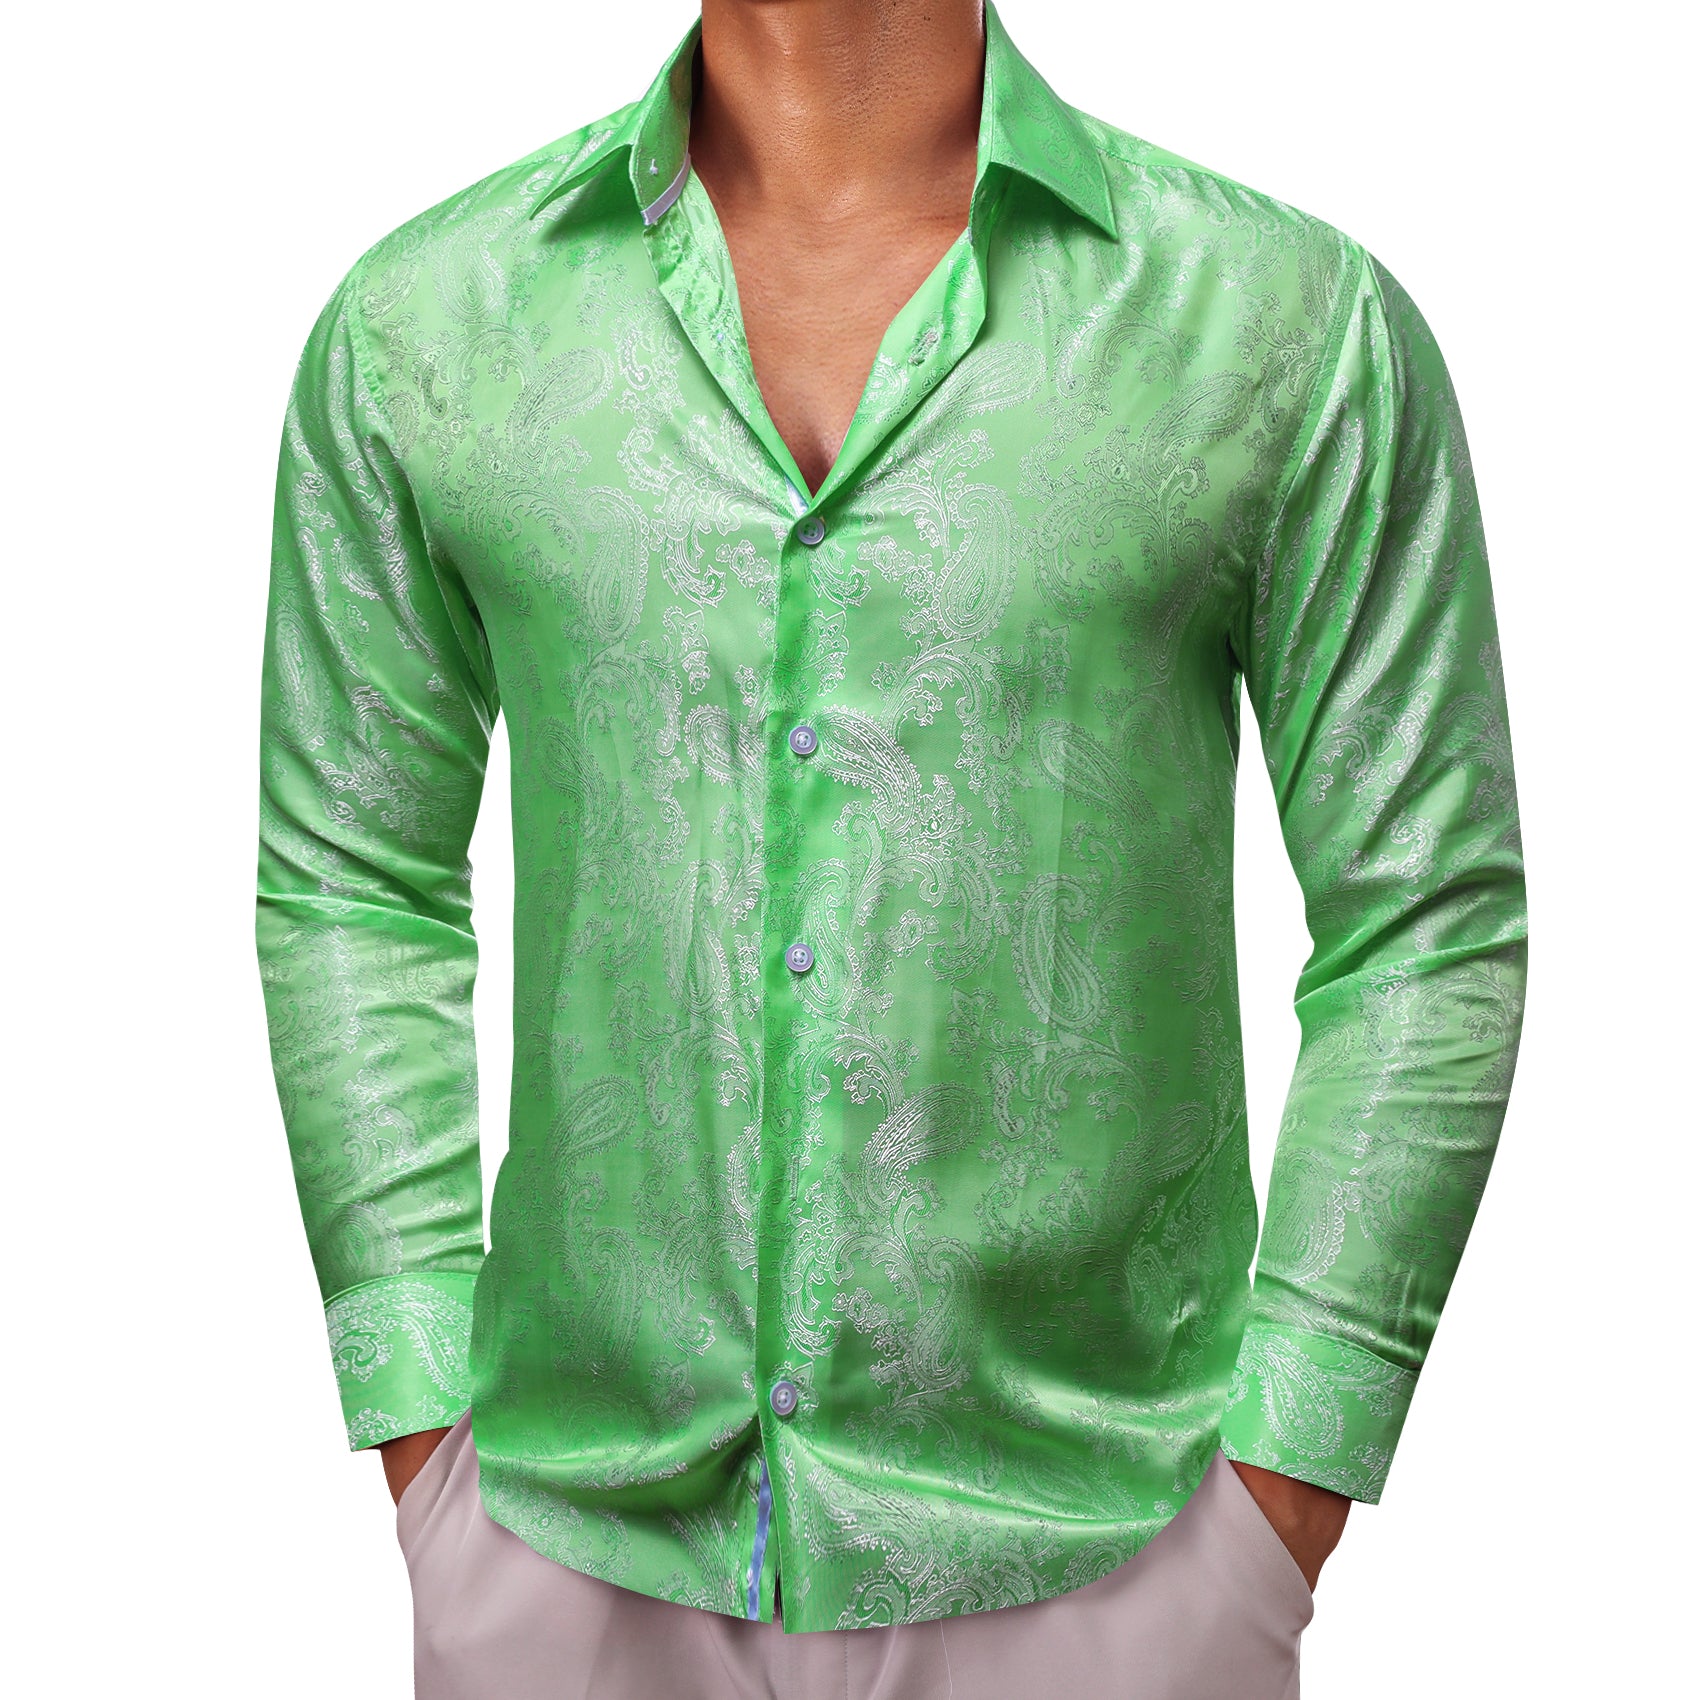 Barry.wang Green White Paisley Silk Men's Shirt